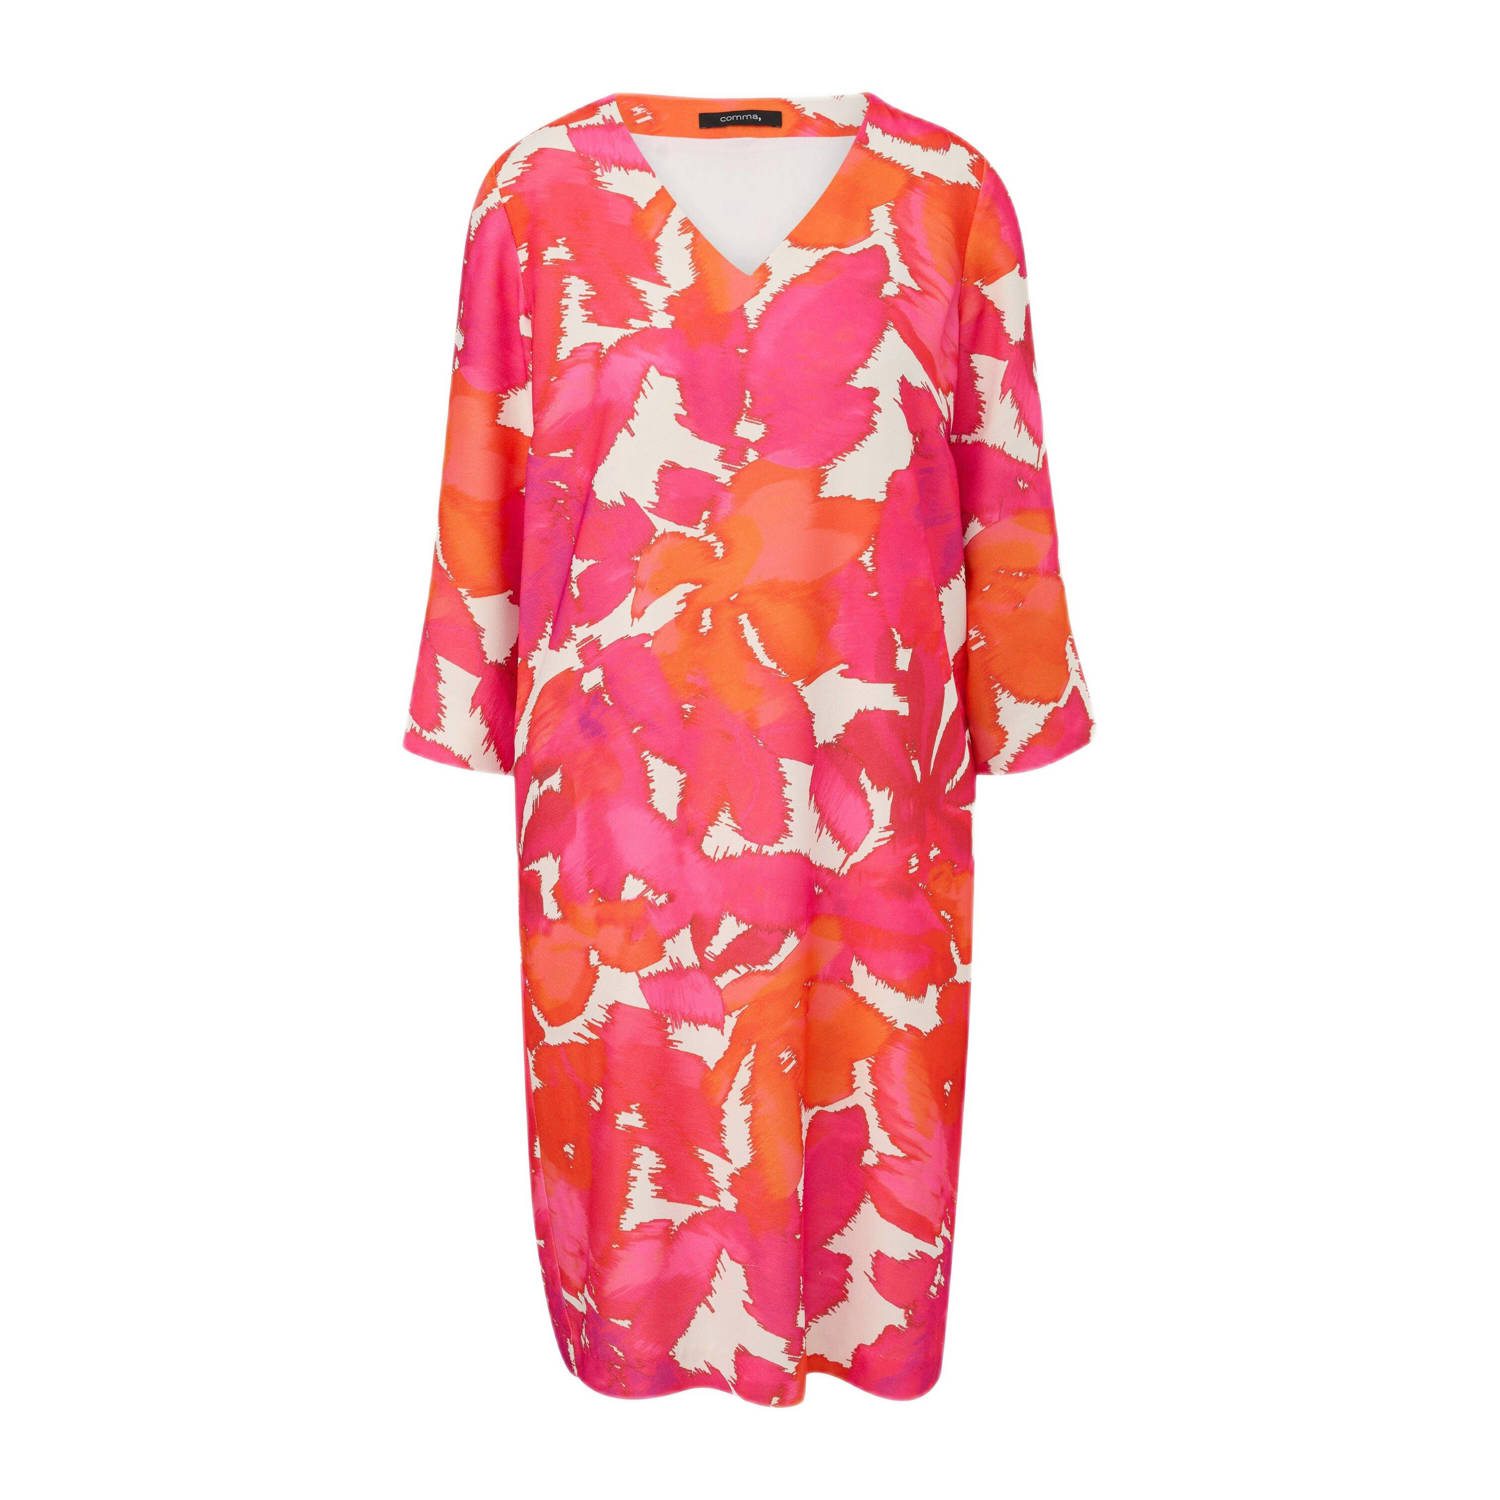 Comma jurk met all over print roze oranje ecru